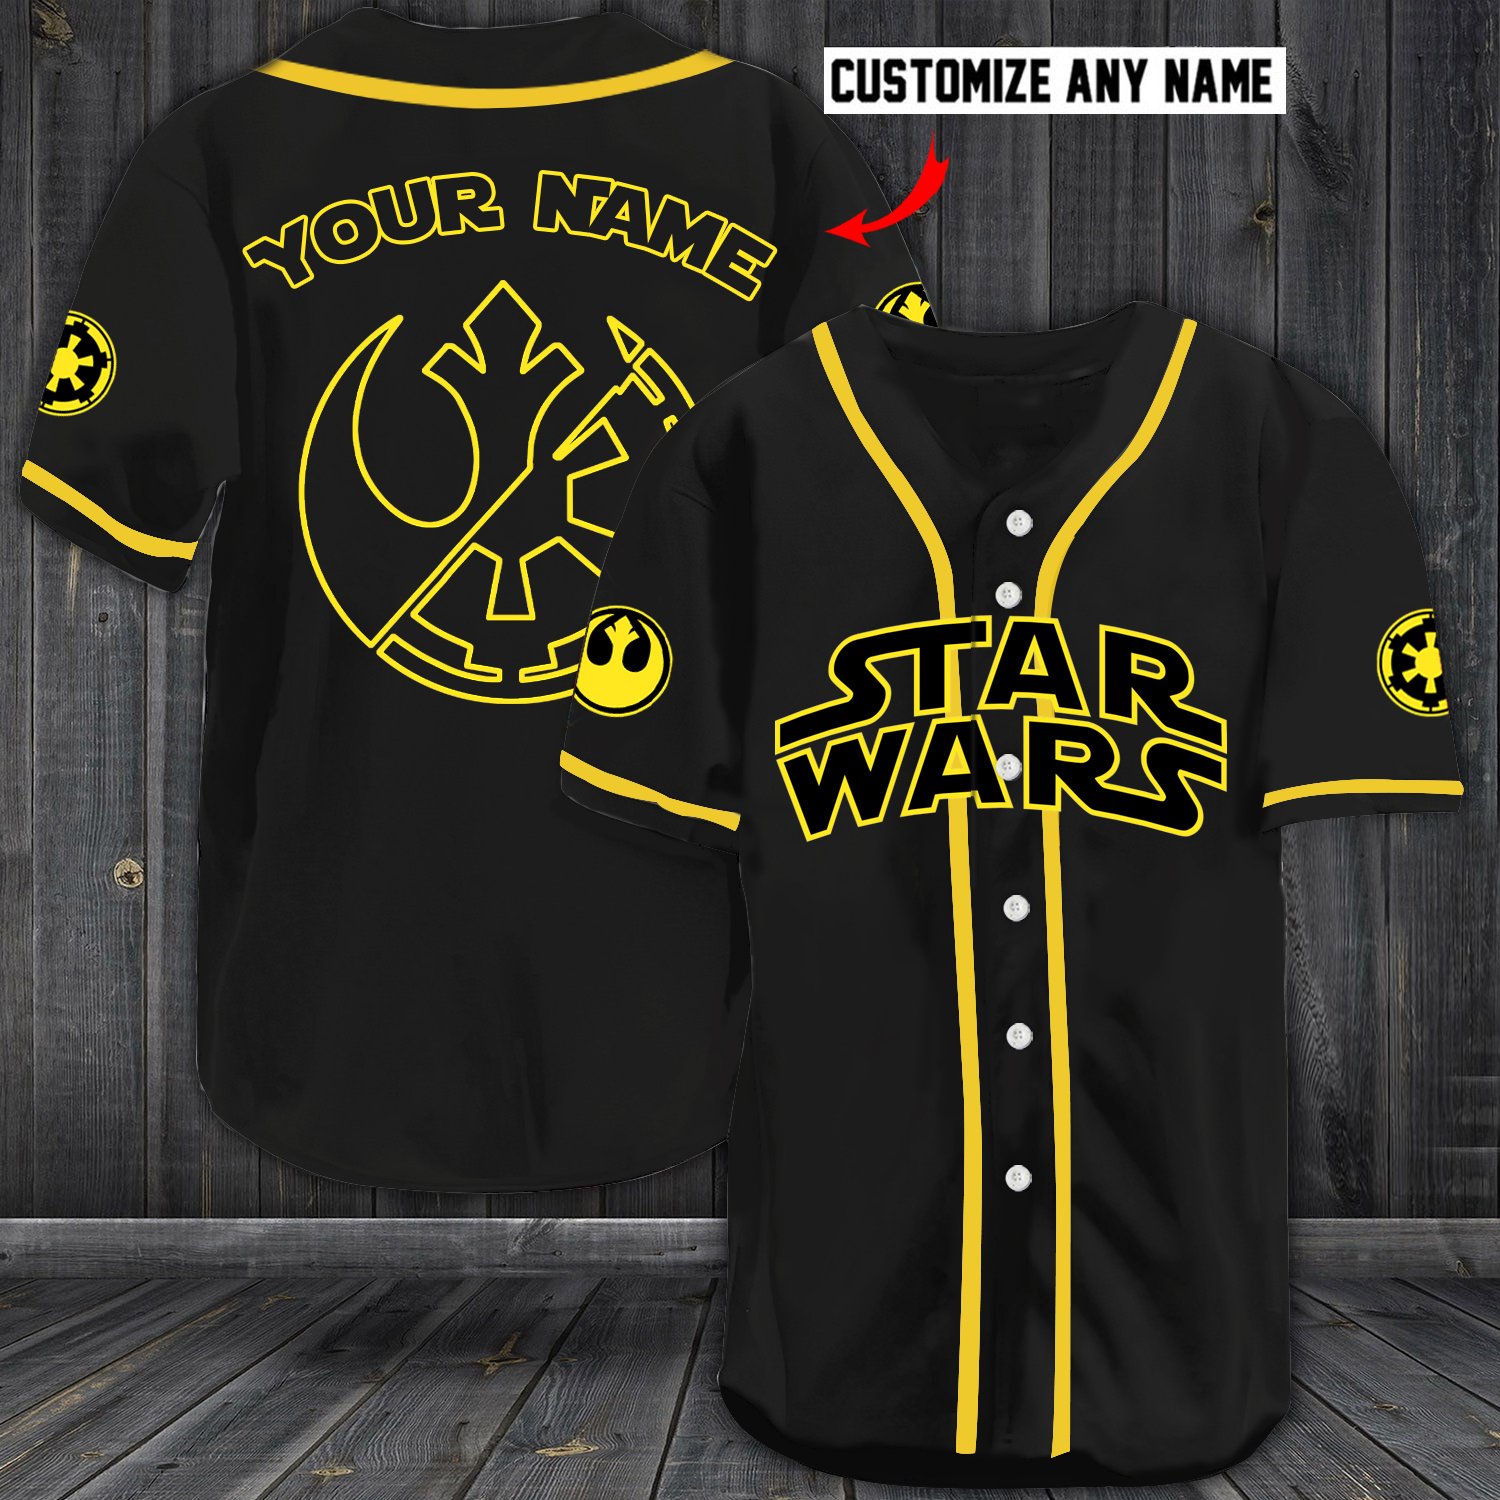 20 Star War custom personalized name Baseball Jersey shirt 1